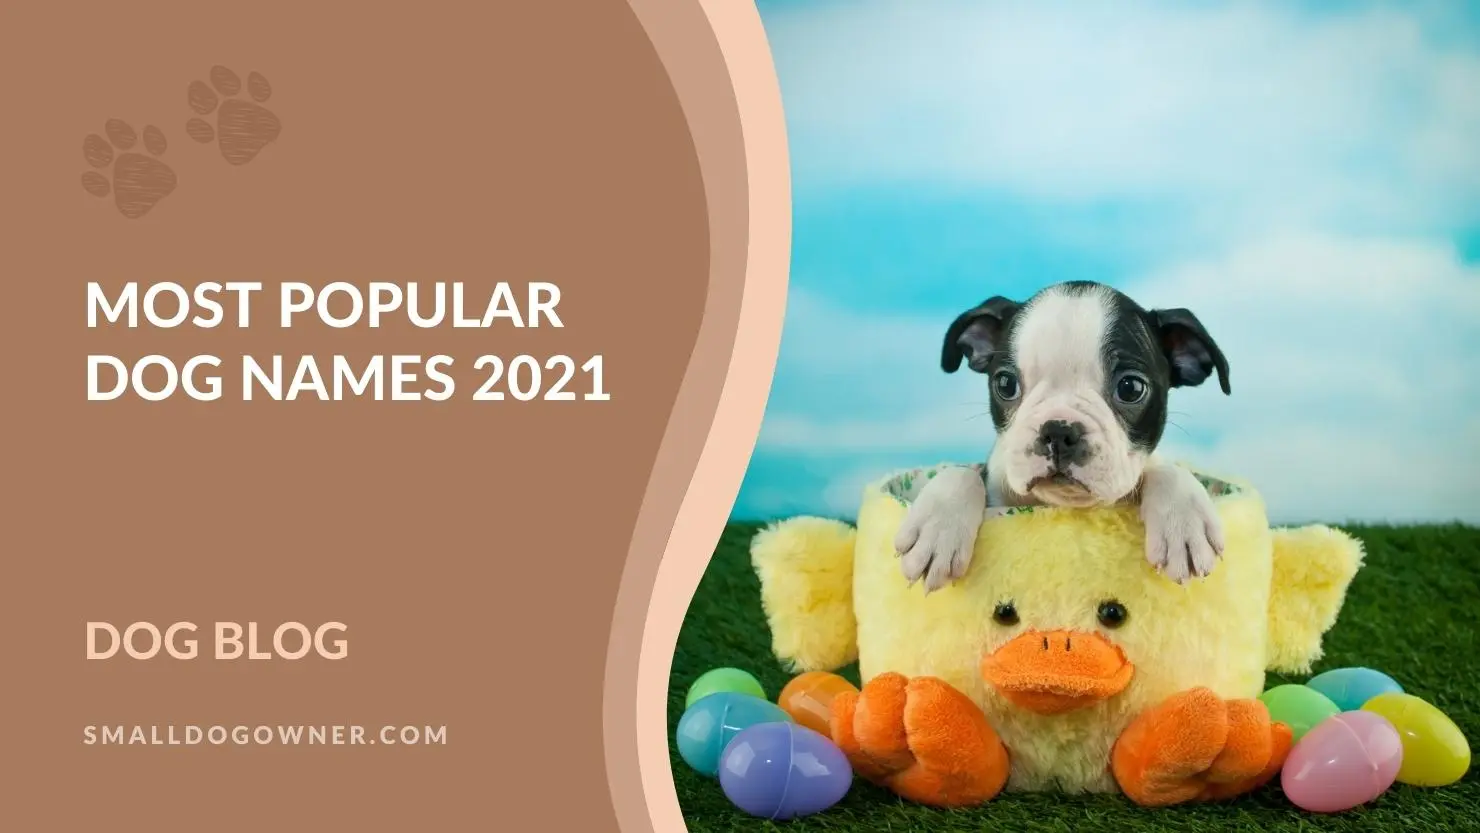 Most popular dog names 2021